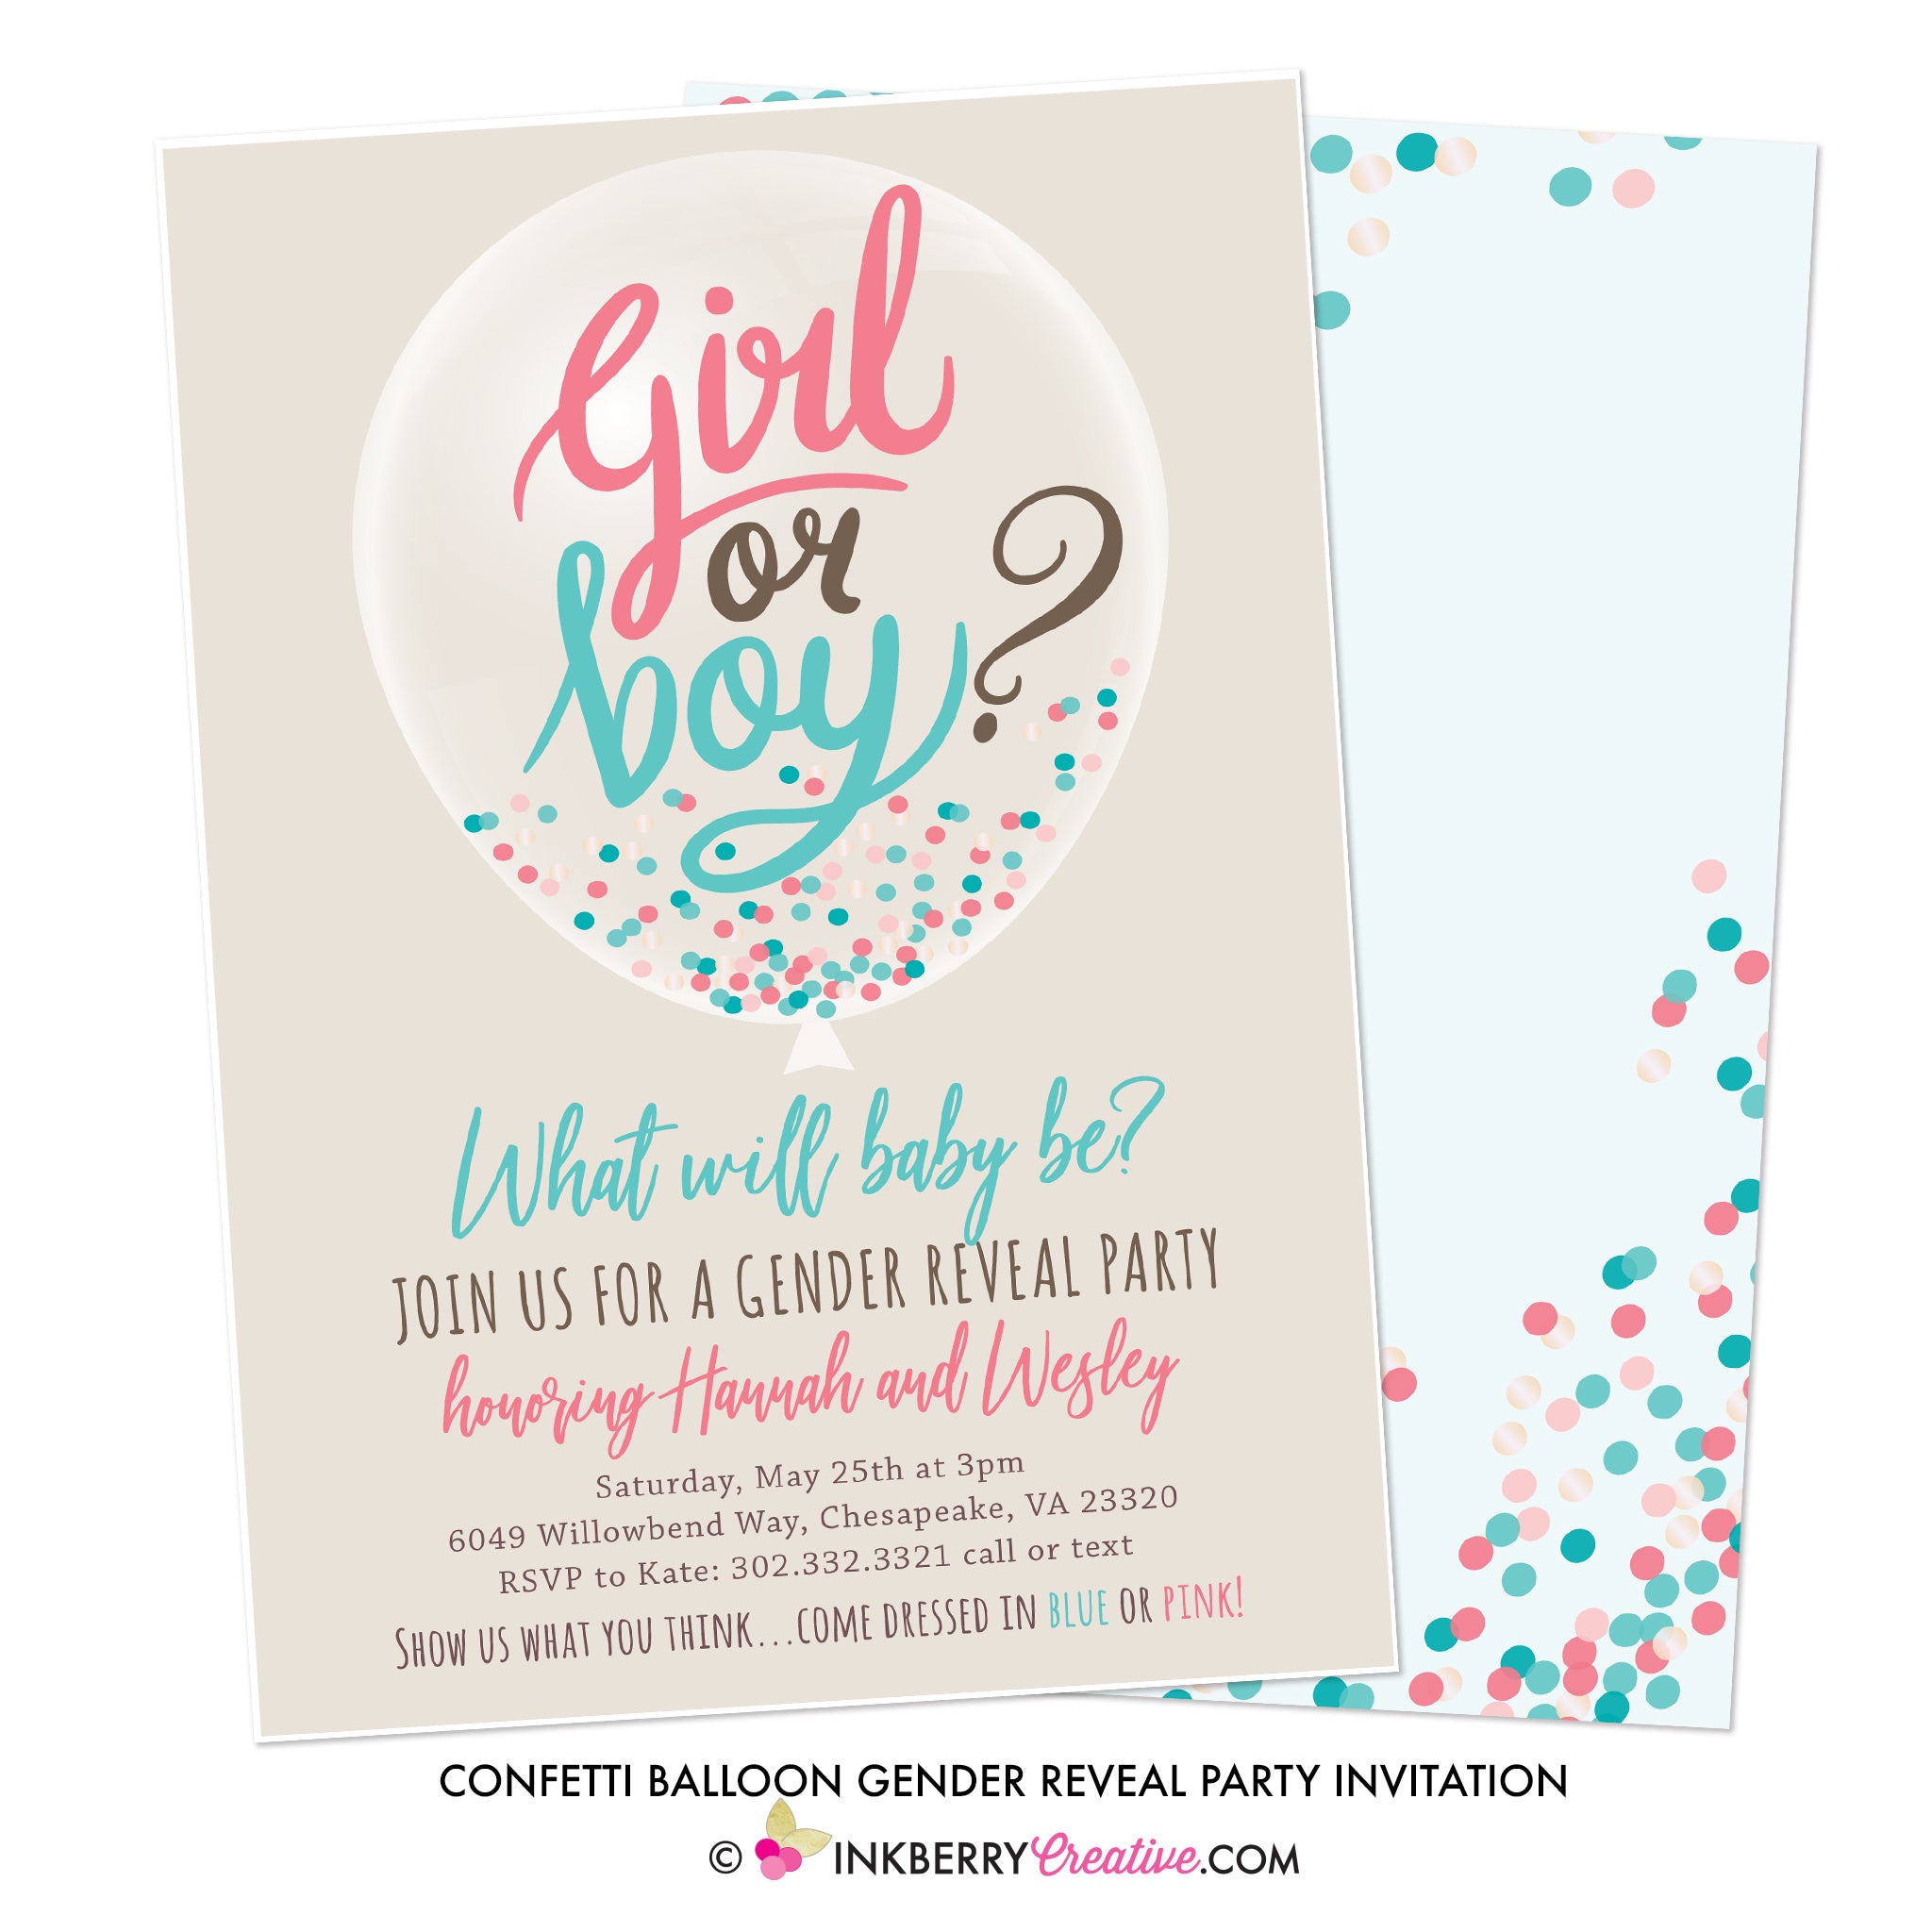 Confetti Balloon Gender Reveal Party Invitation Inkberry Creative Inc 